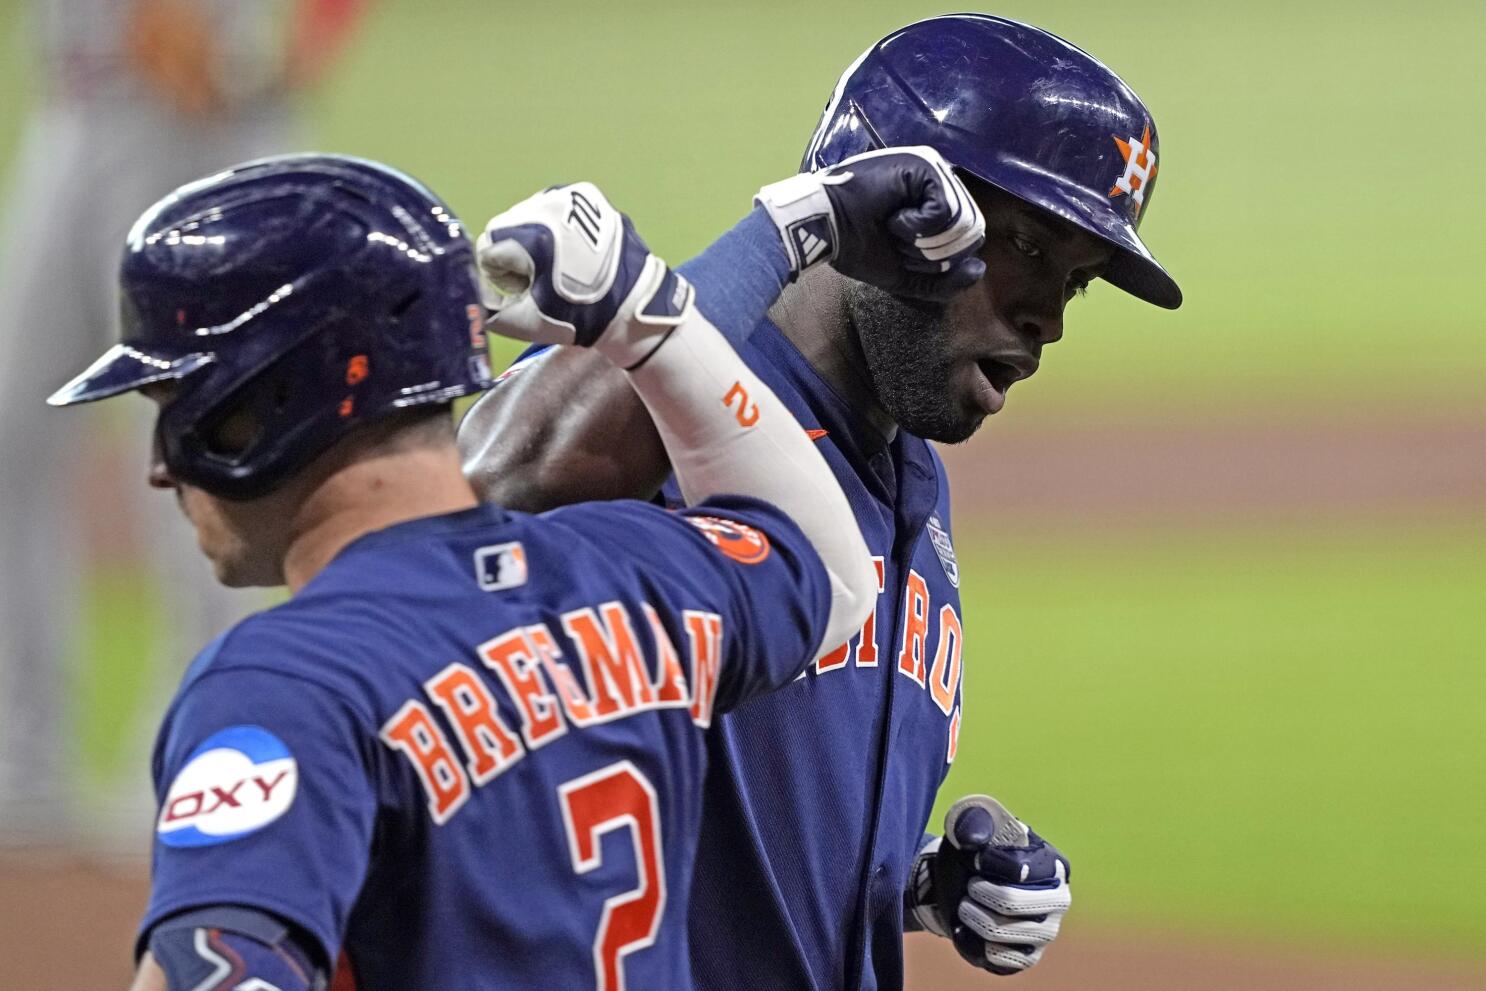 García, Alvarez help Astros oust Red Sox, reach World Series - The Columbian